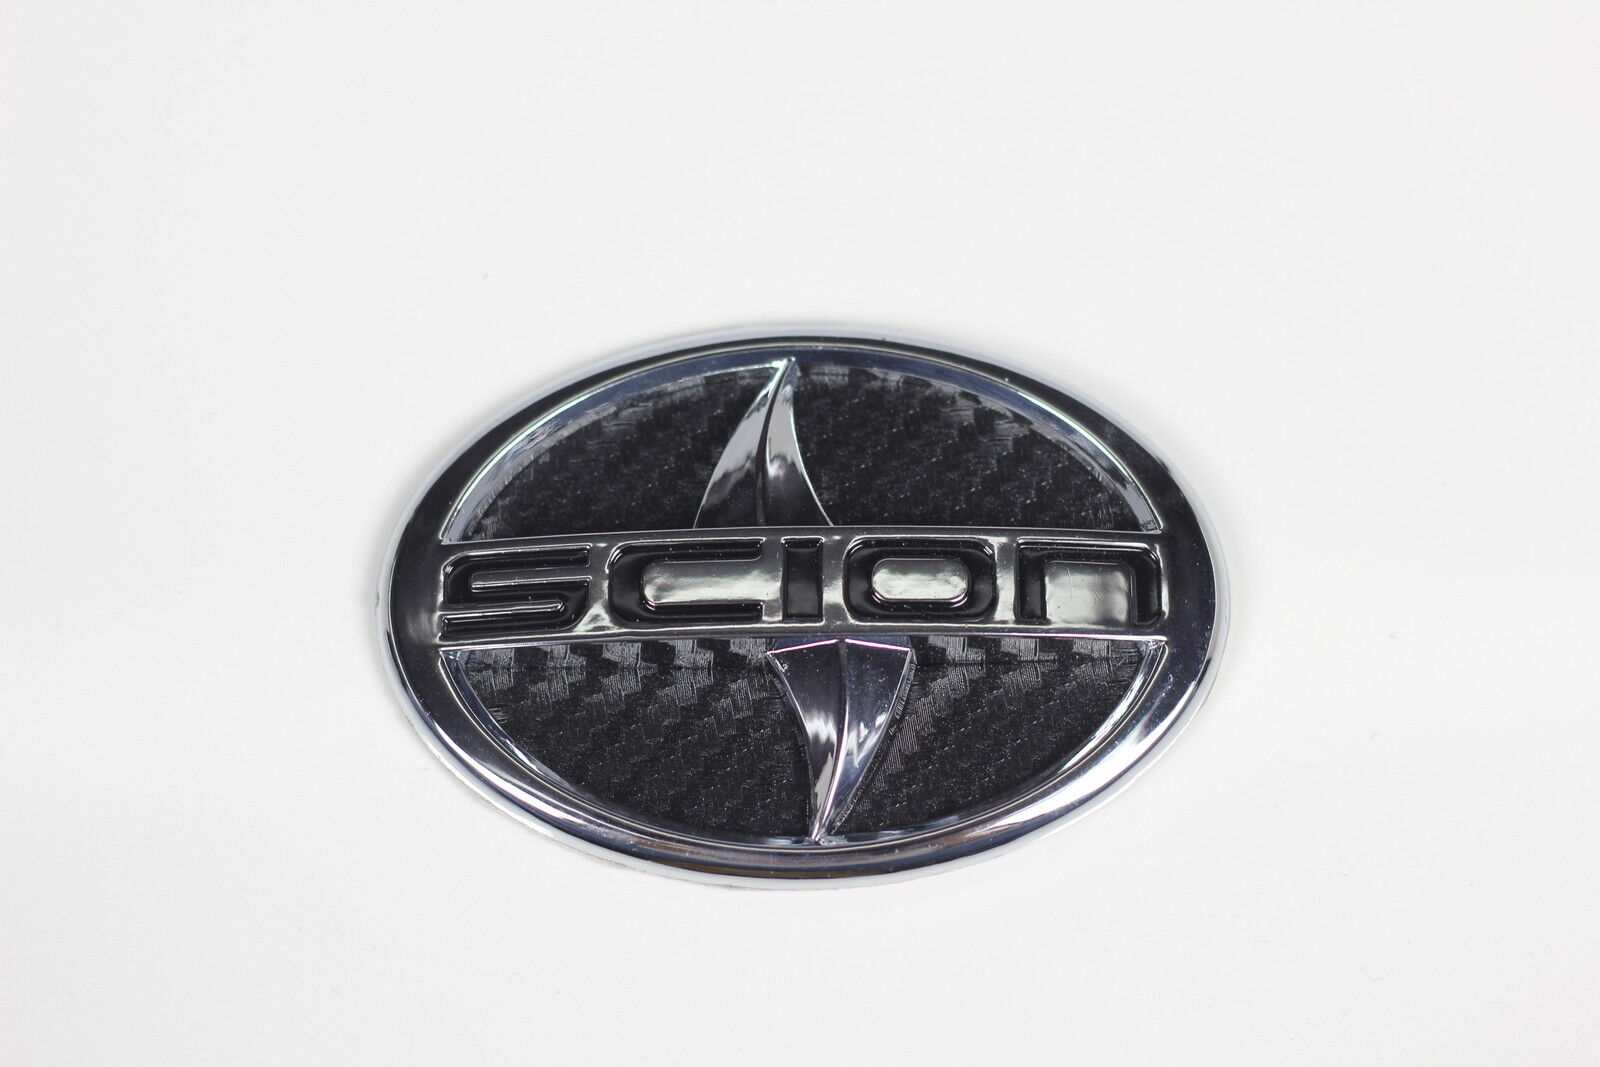 Scion Emblem Big Black Carbon Fiber style tC xA Front letter Badge sticker